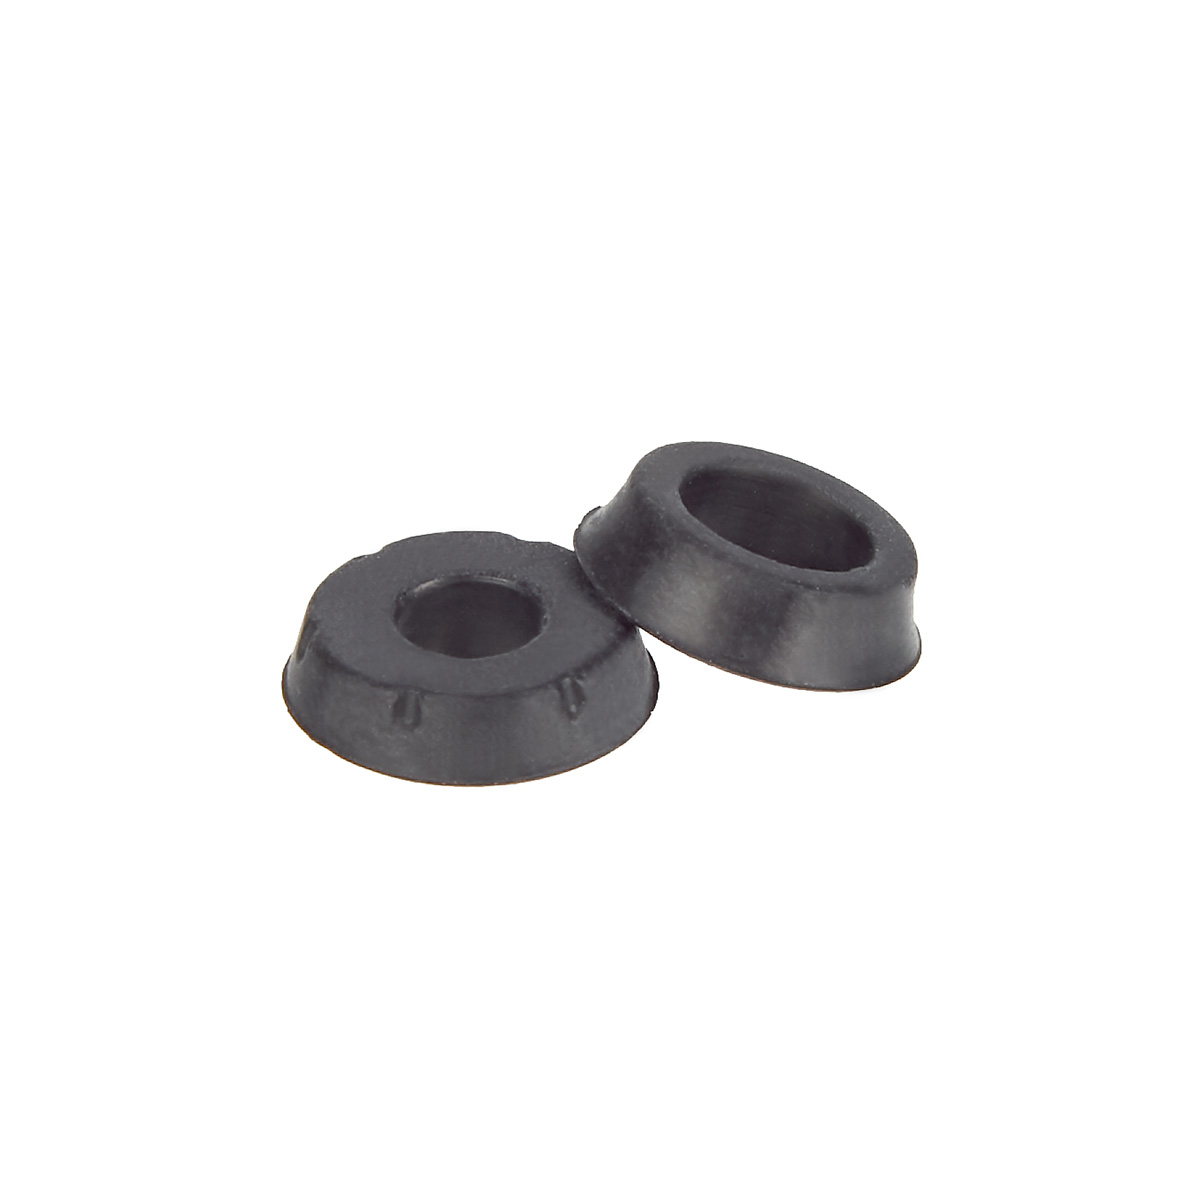 ZAP Seal Ring  Front, Nissin, Black, Diameter 11mm